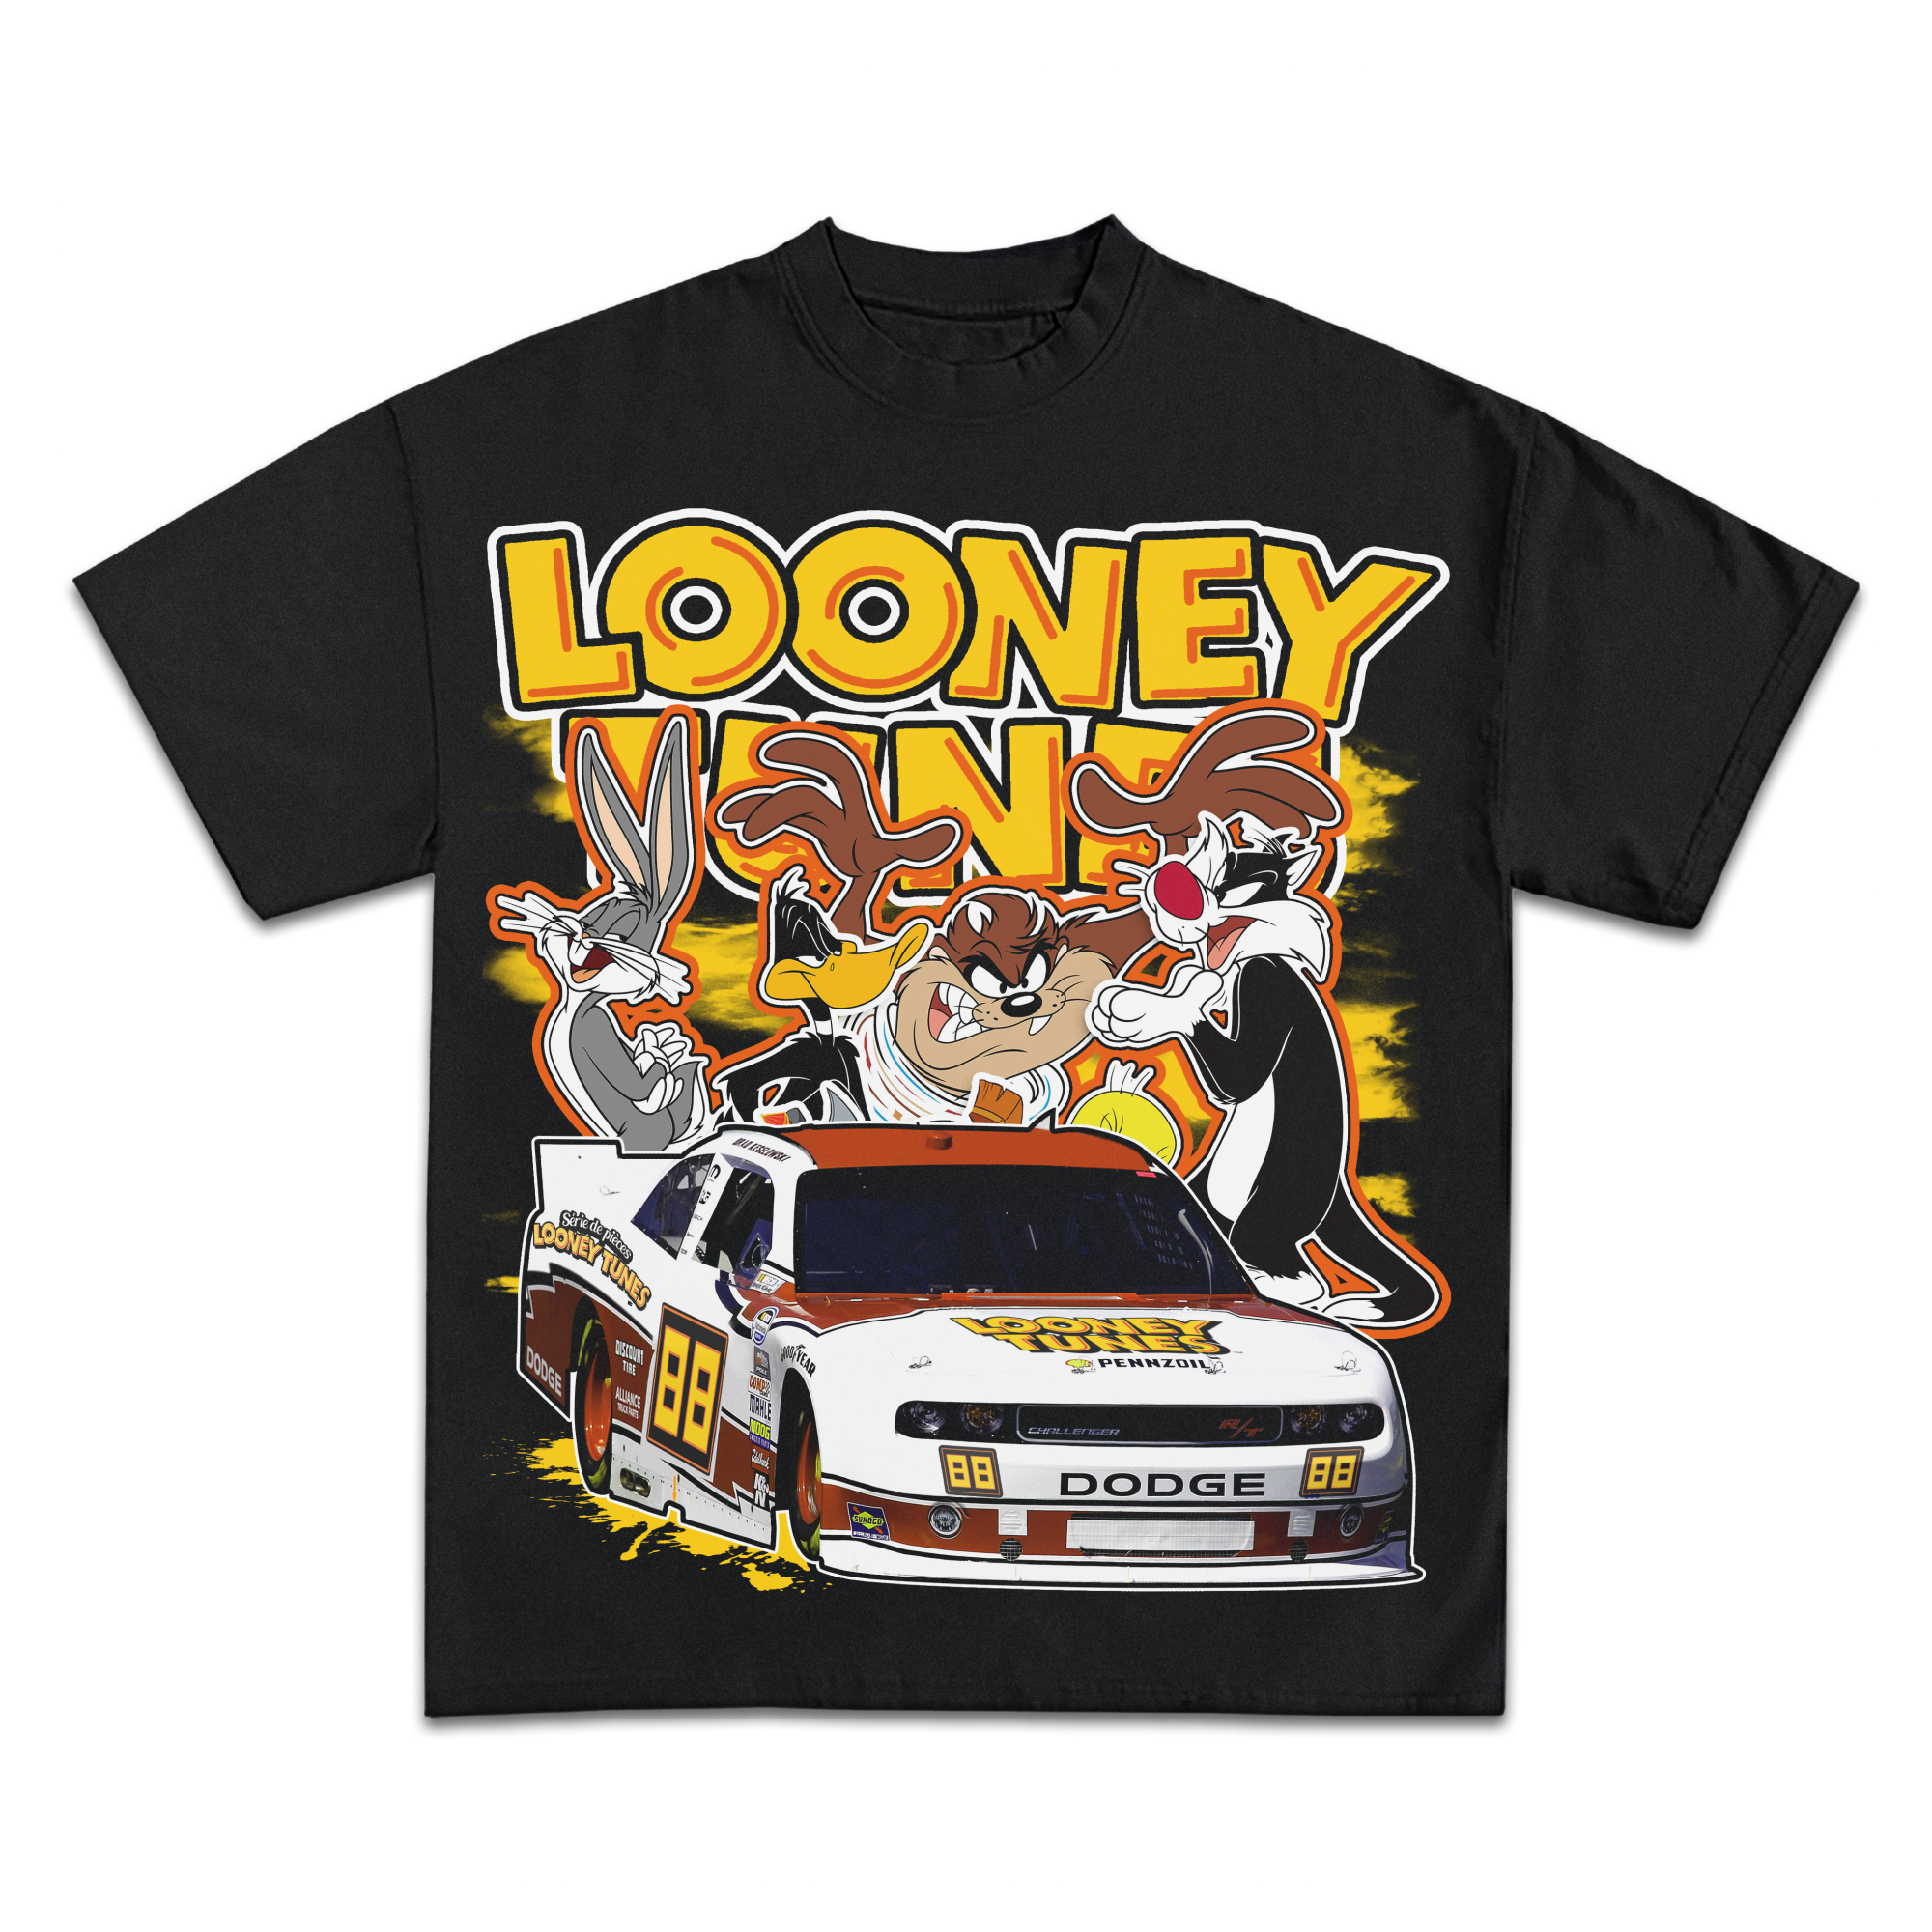 Looney Tunes Racing Graphic T-Shirt